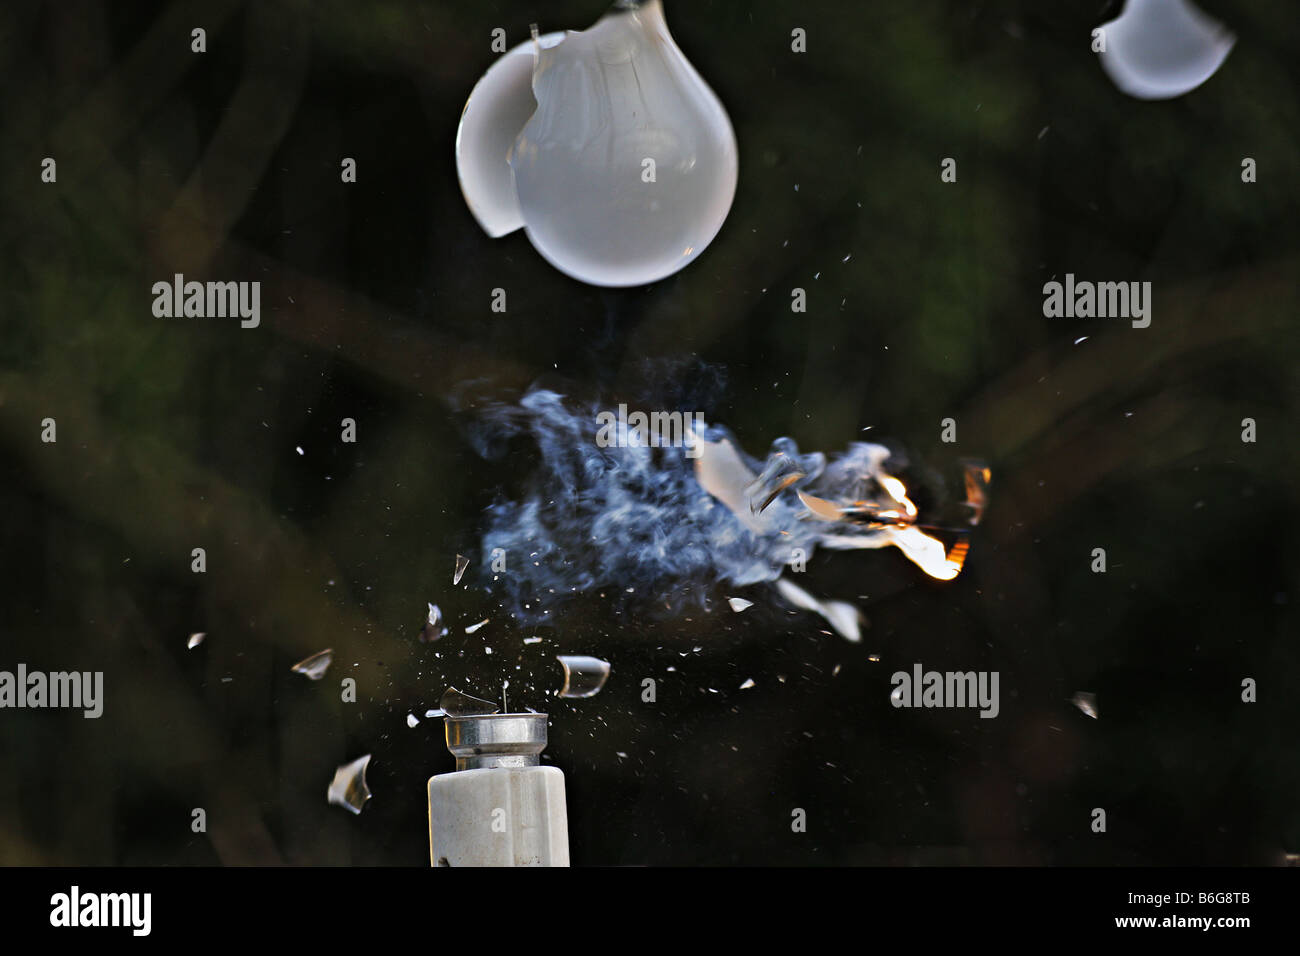 Exploding light bulb Stock Photo